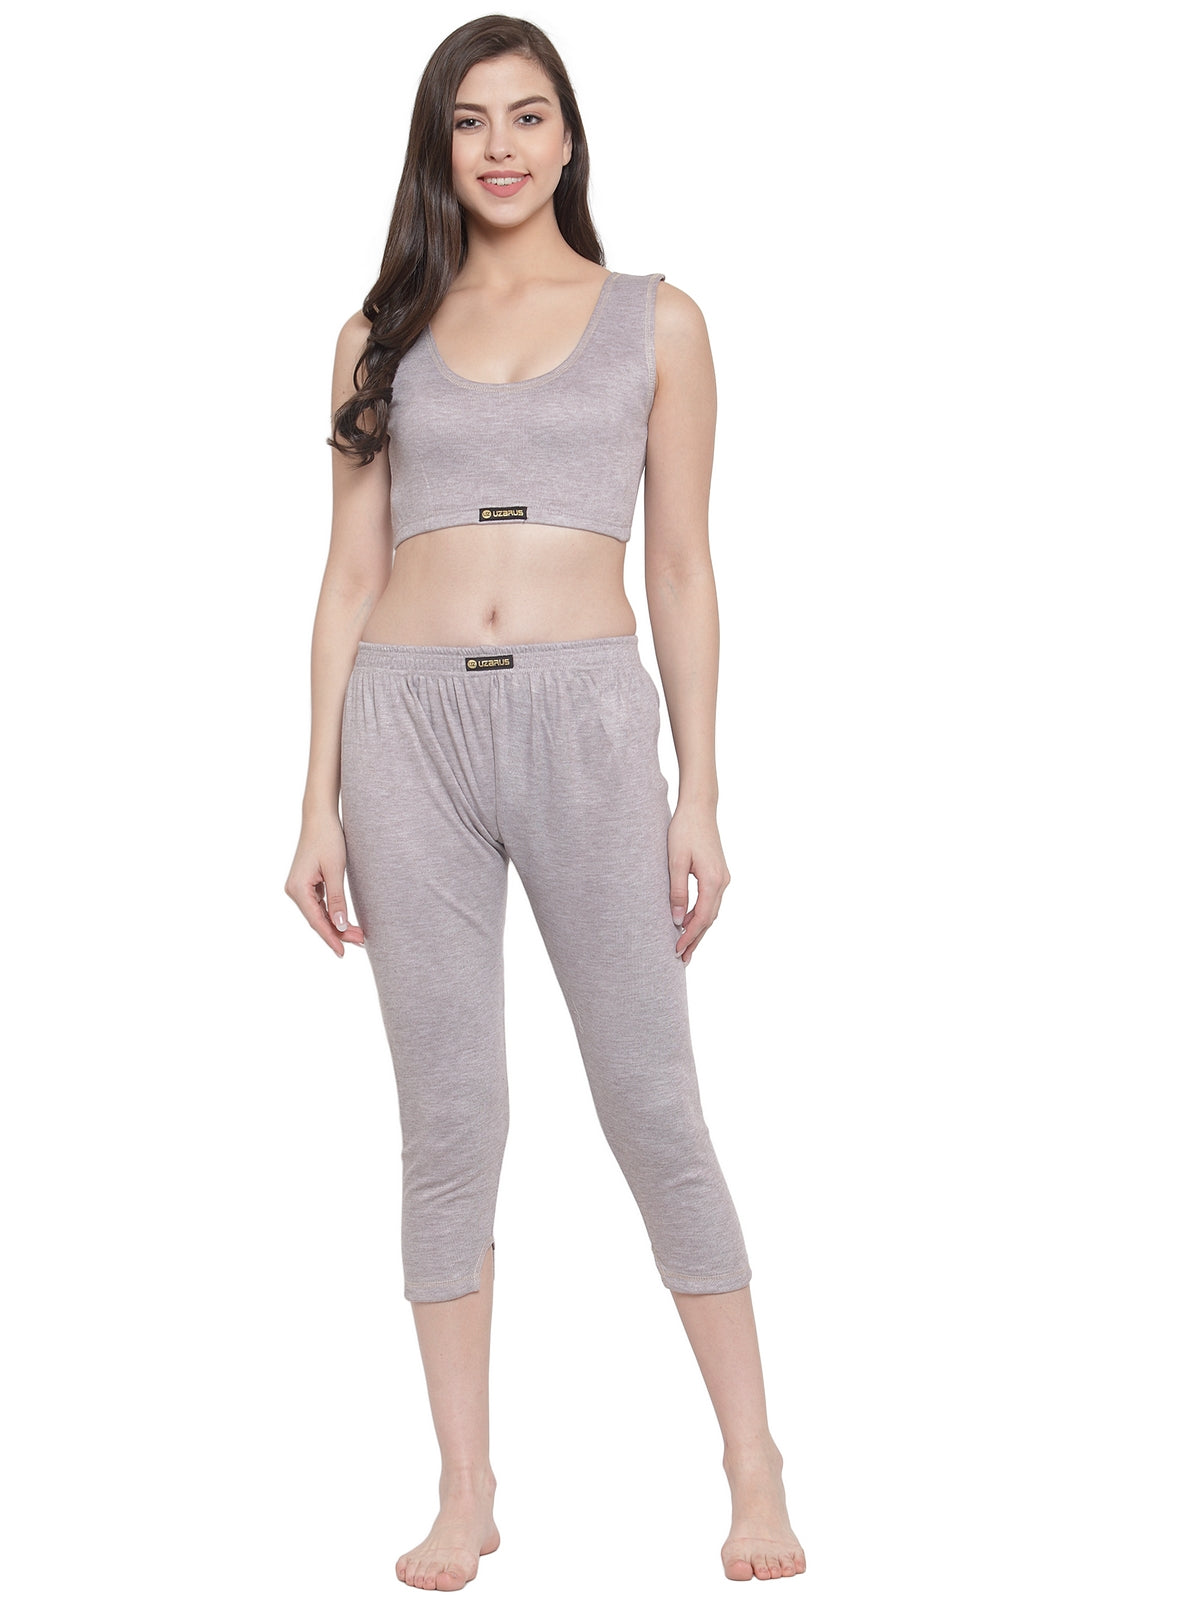 Buy Jairy Shop Thermal Wear for Women Thermal Top Sleeveless (Grey